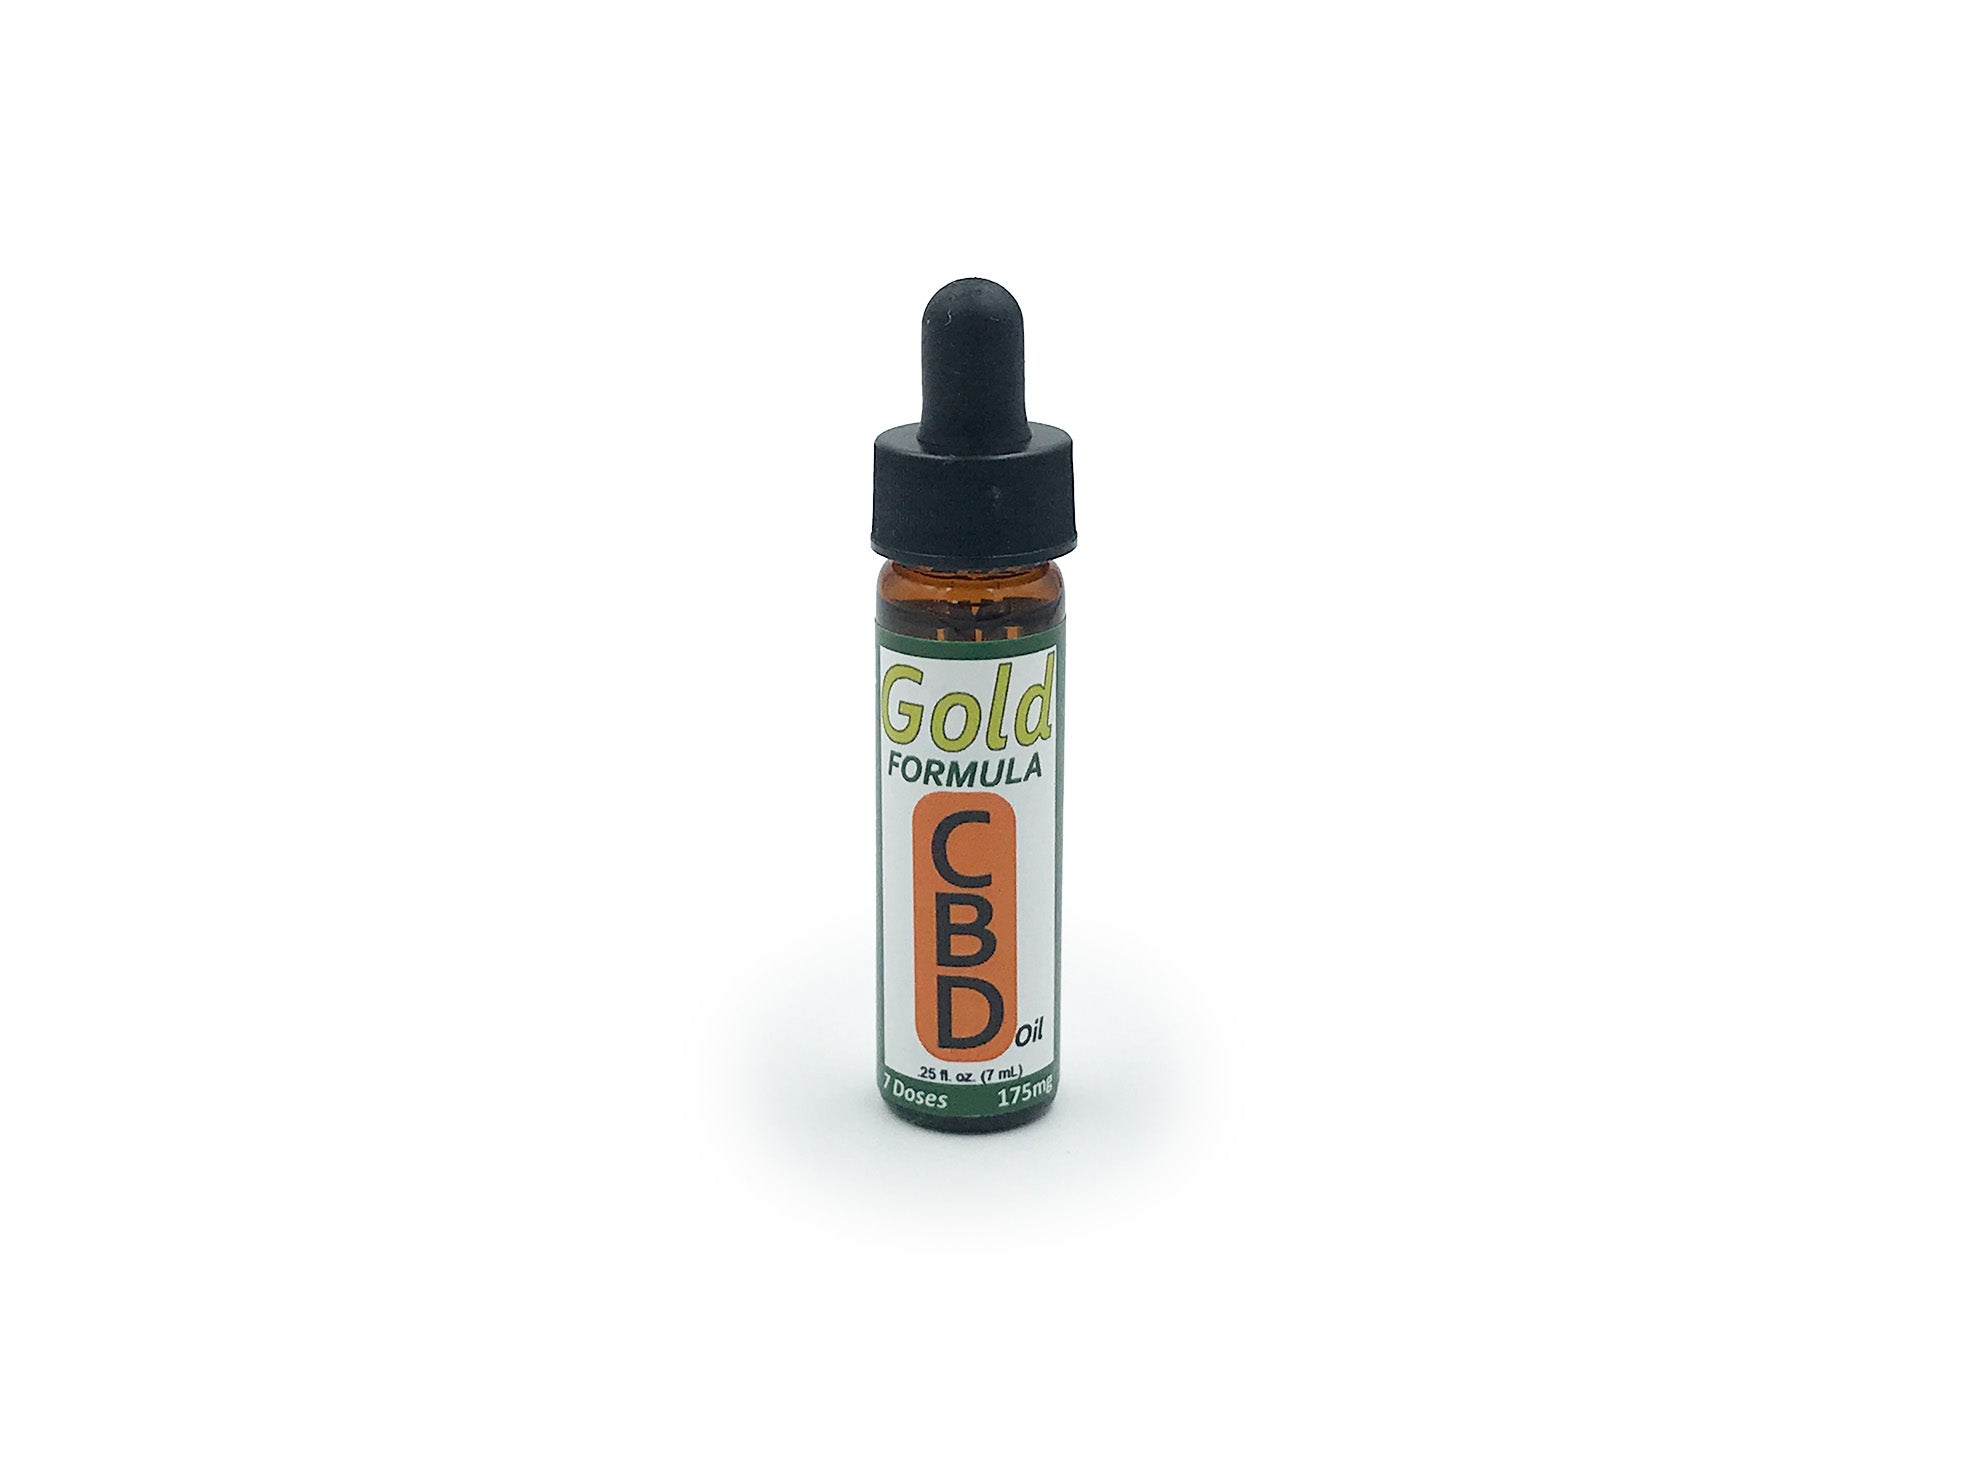 Gold Formula CBD Oil